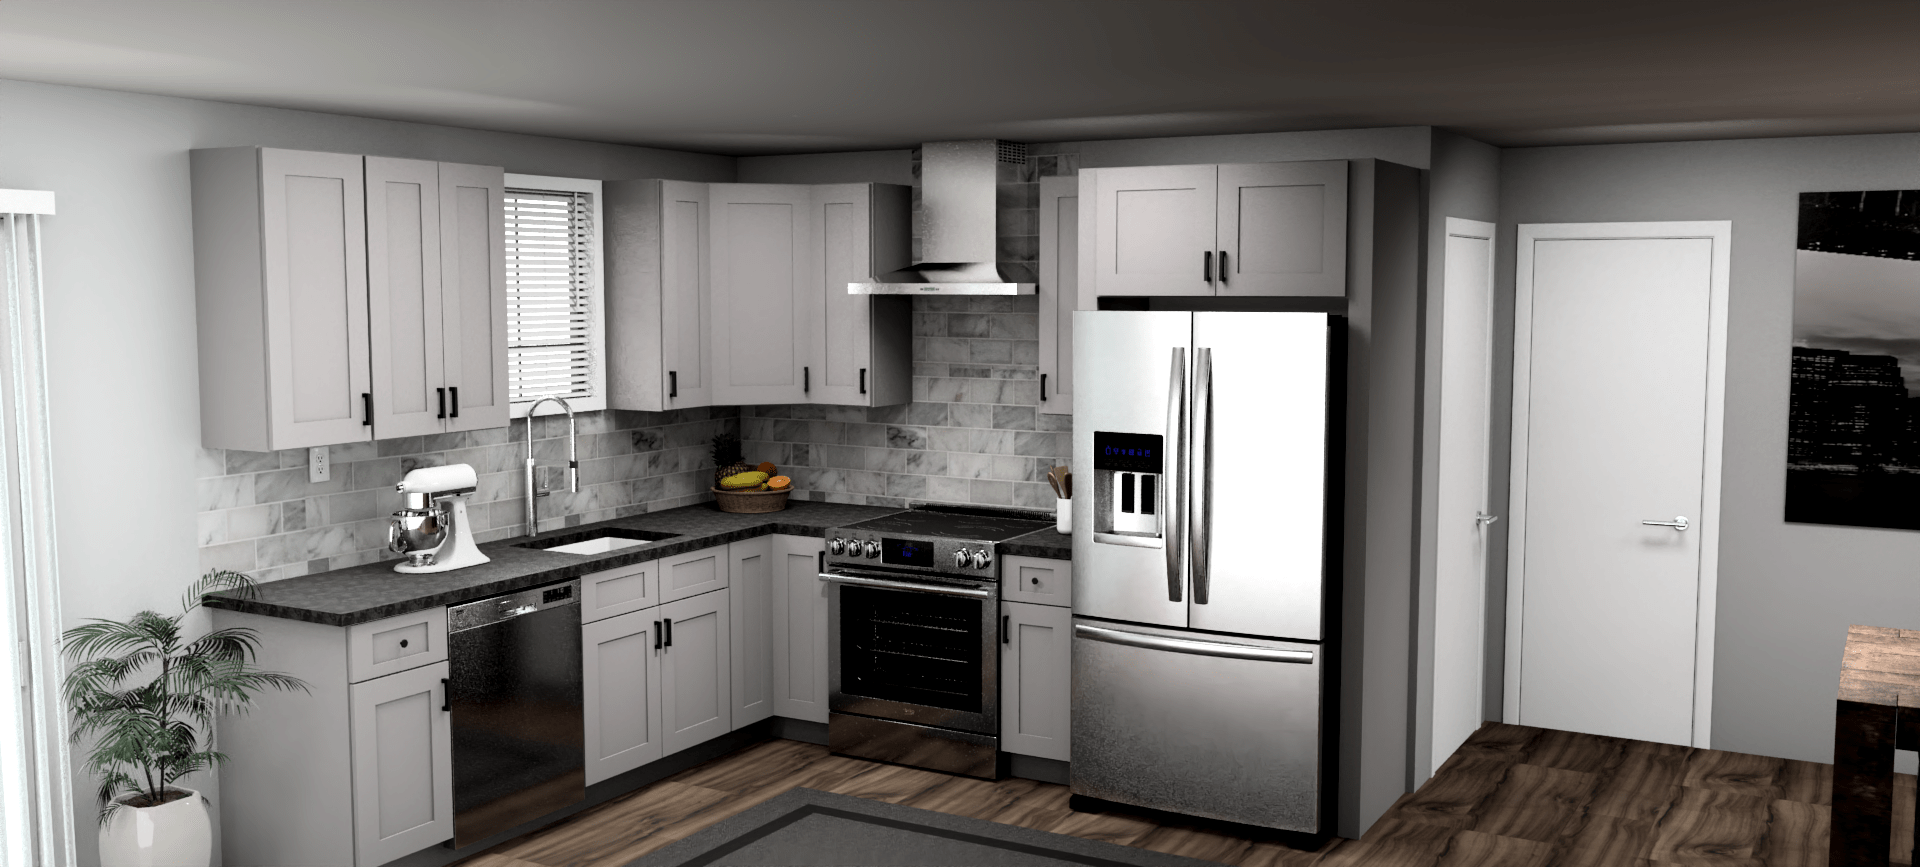 Fabuwood Allure Galaxy Nickel 9 x 10 L Shaped Kitchen Main Layout Photo